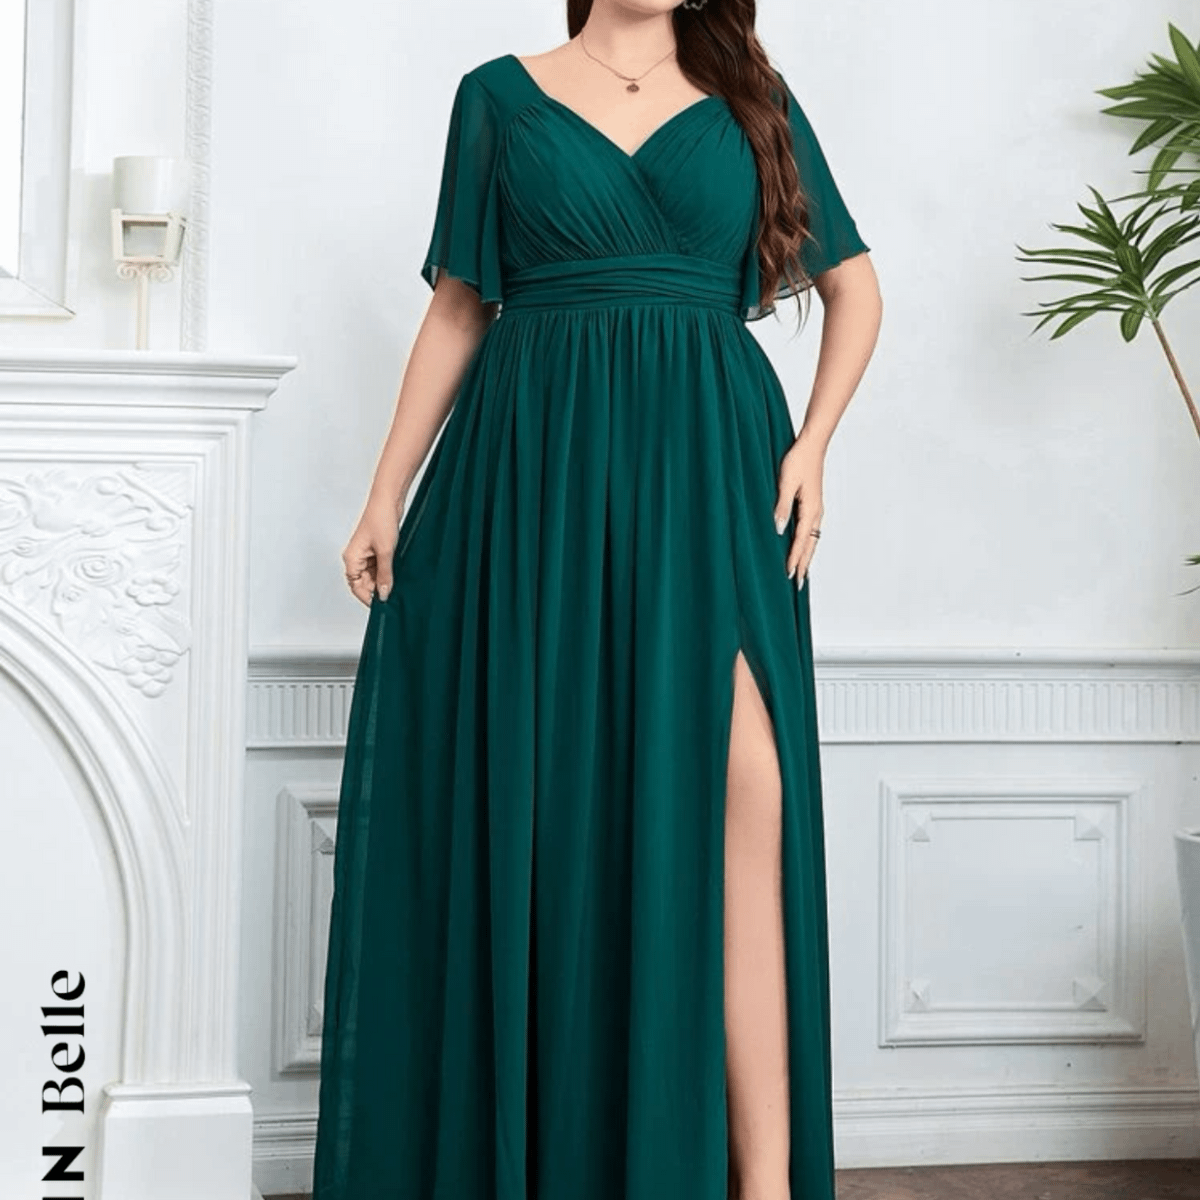 Vestido plus size verde esmeralda shein 52/54 peça única